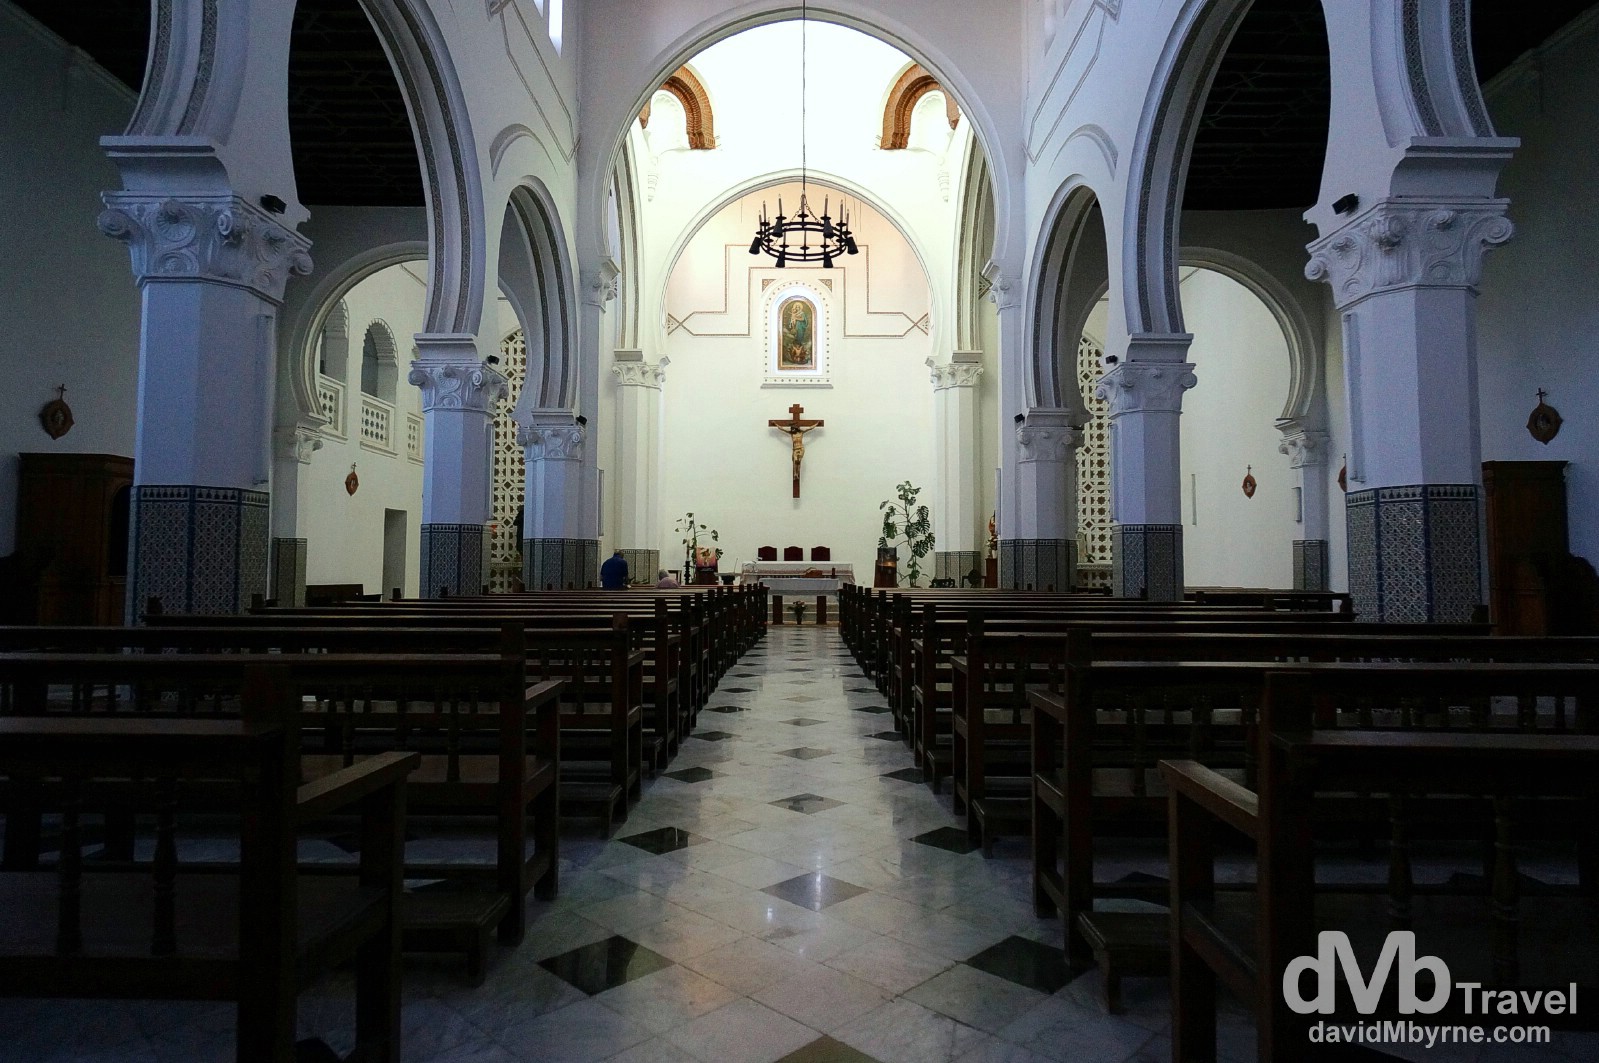 The 1917 Iglesia de Bacturia in Tetouan, Morocco. June 2nd, 2014.